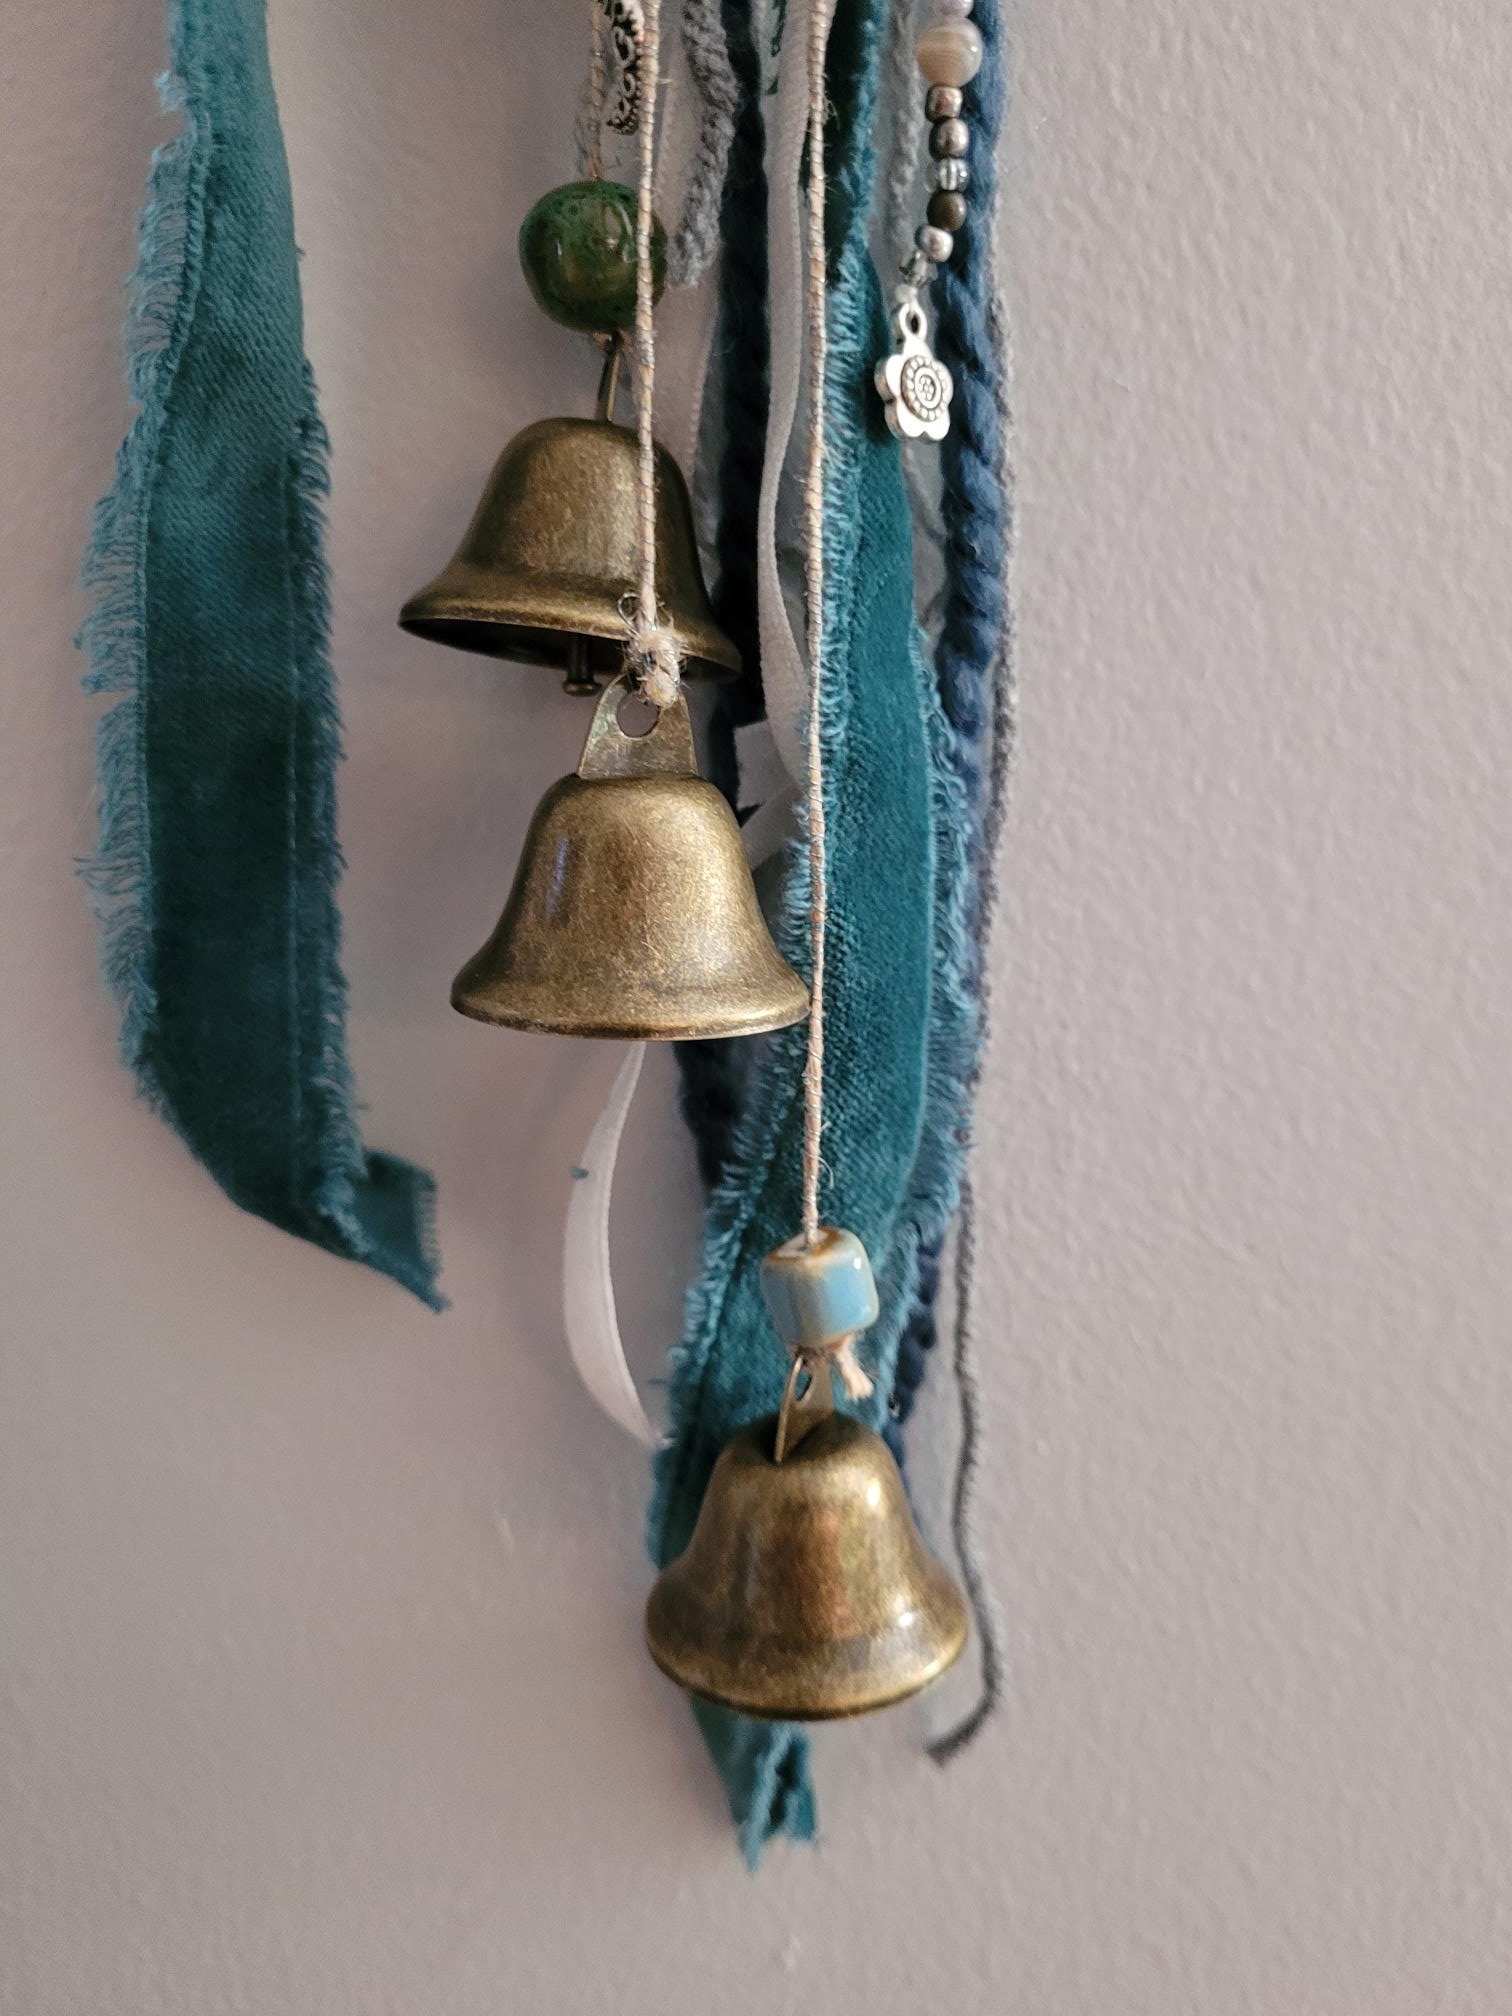 Brass & Wood Bell, Ritual Altar Bell, Witches Bells, School Bell 